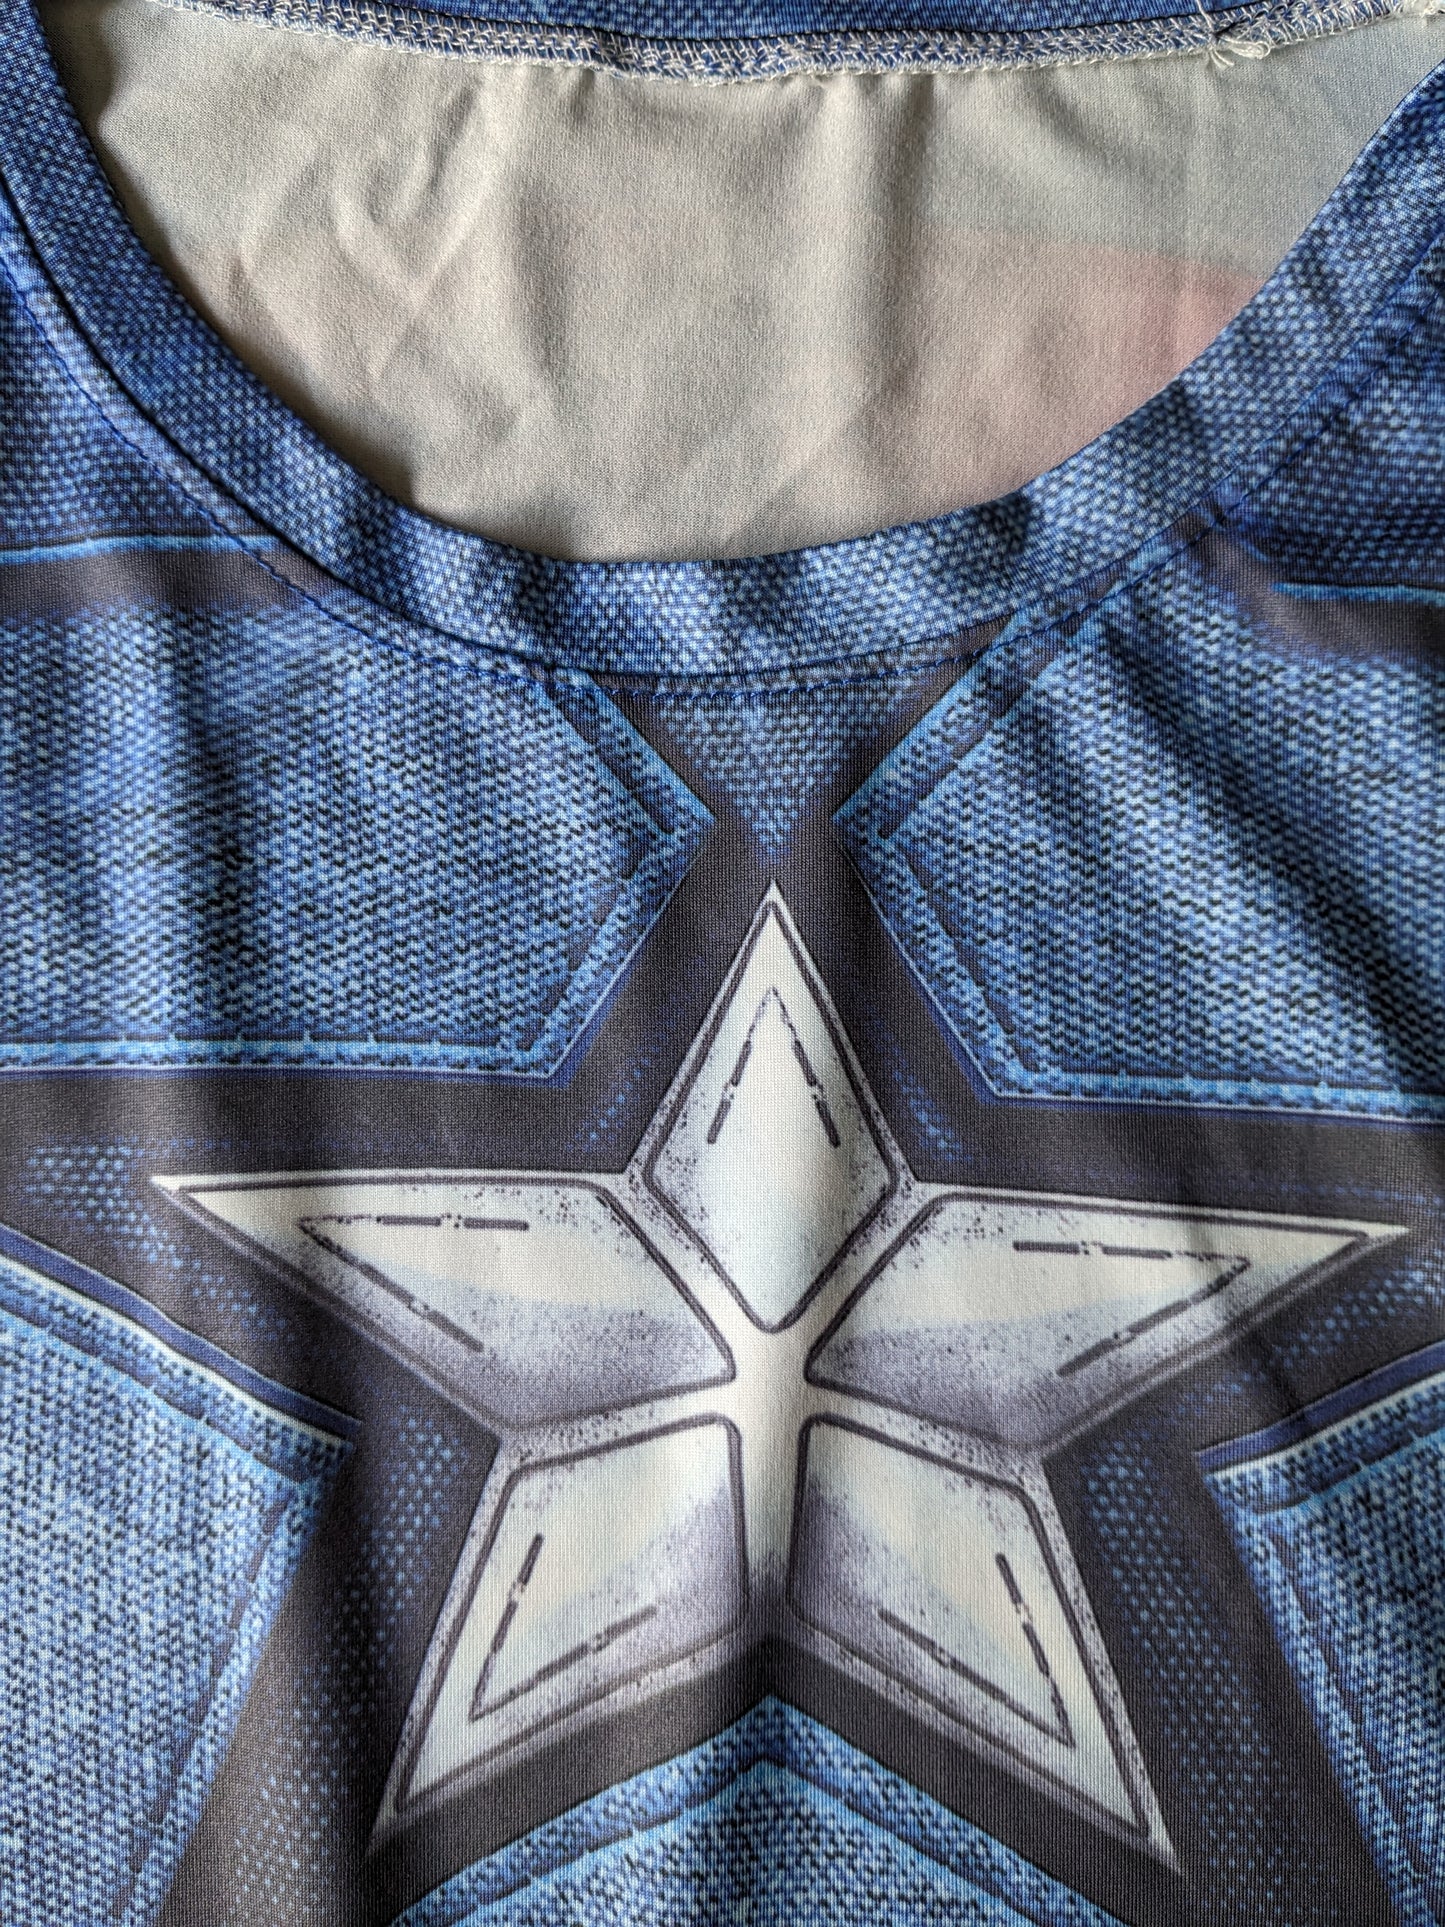 Captain America Shirt. Impression bleu blanc rouge. Taille M / L. Stretch.